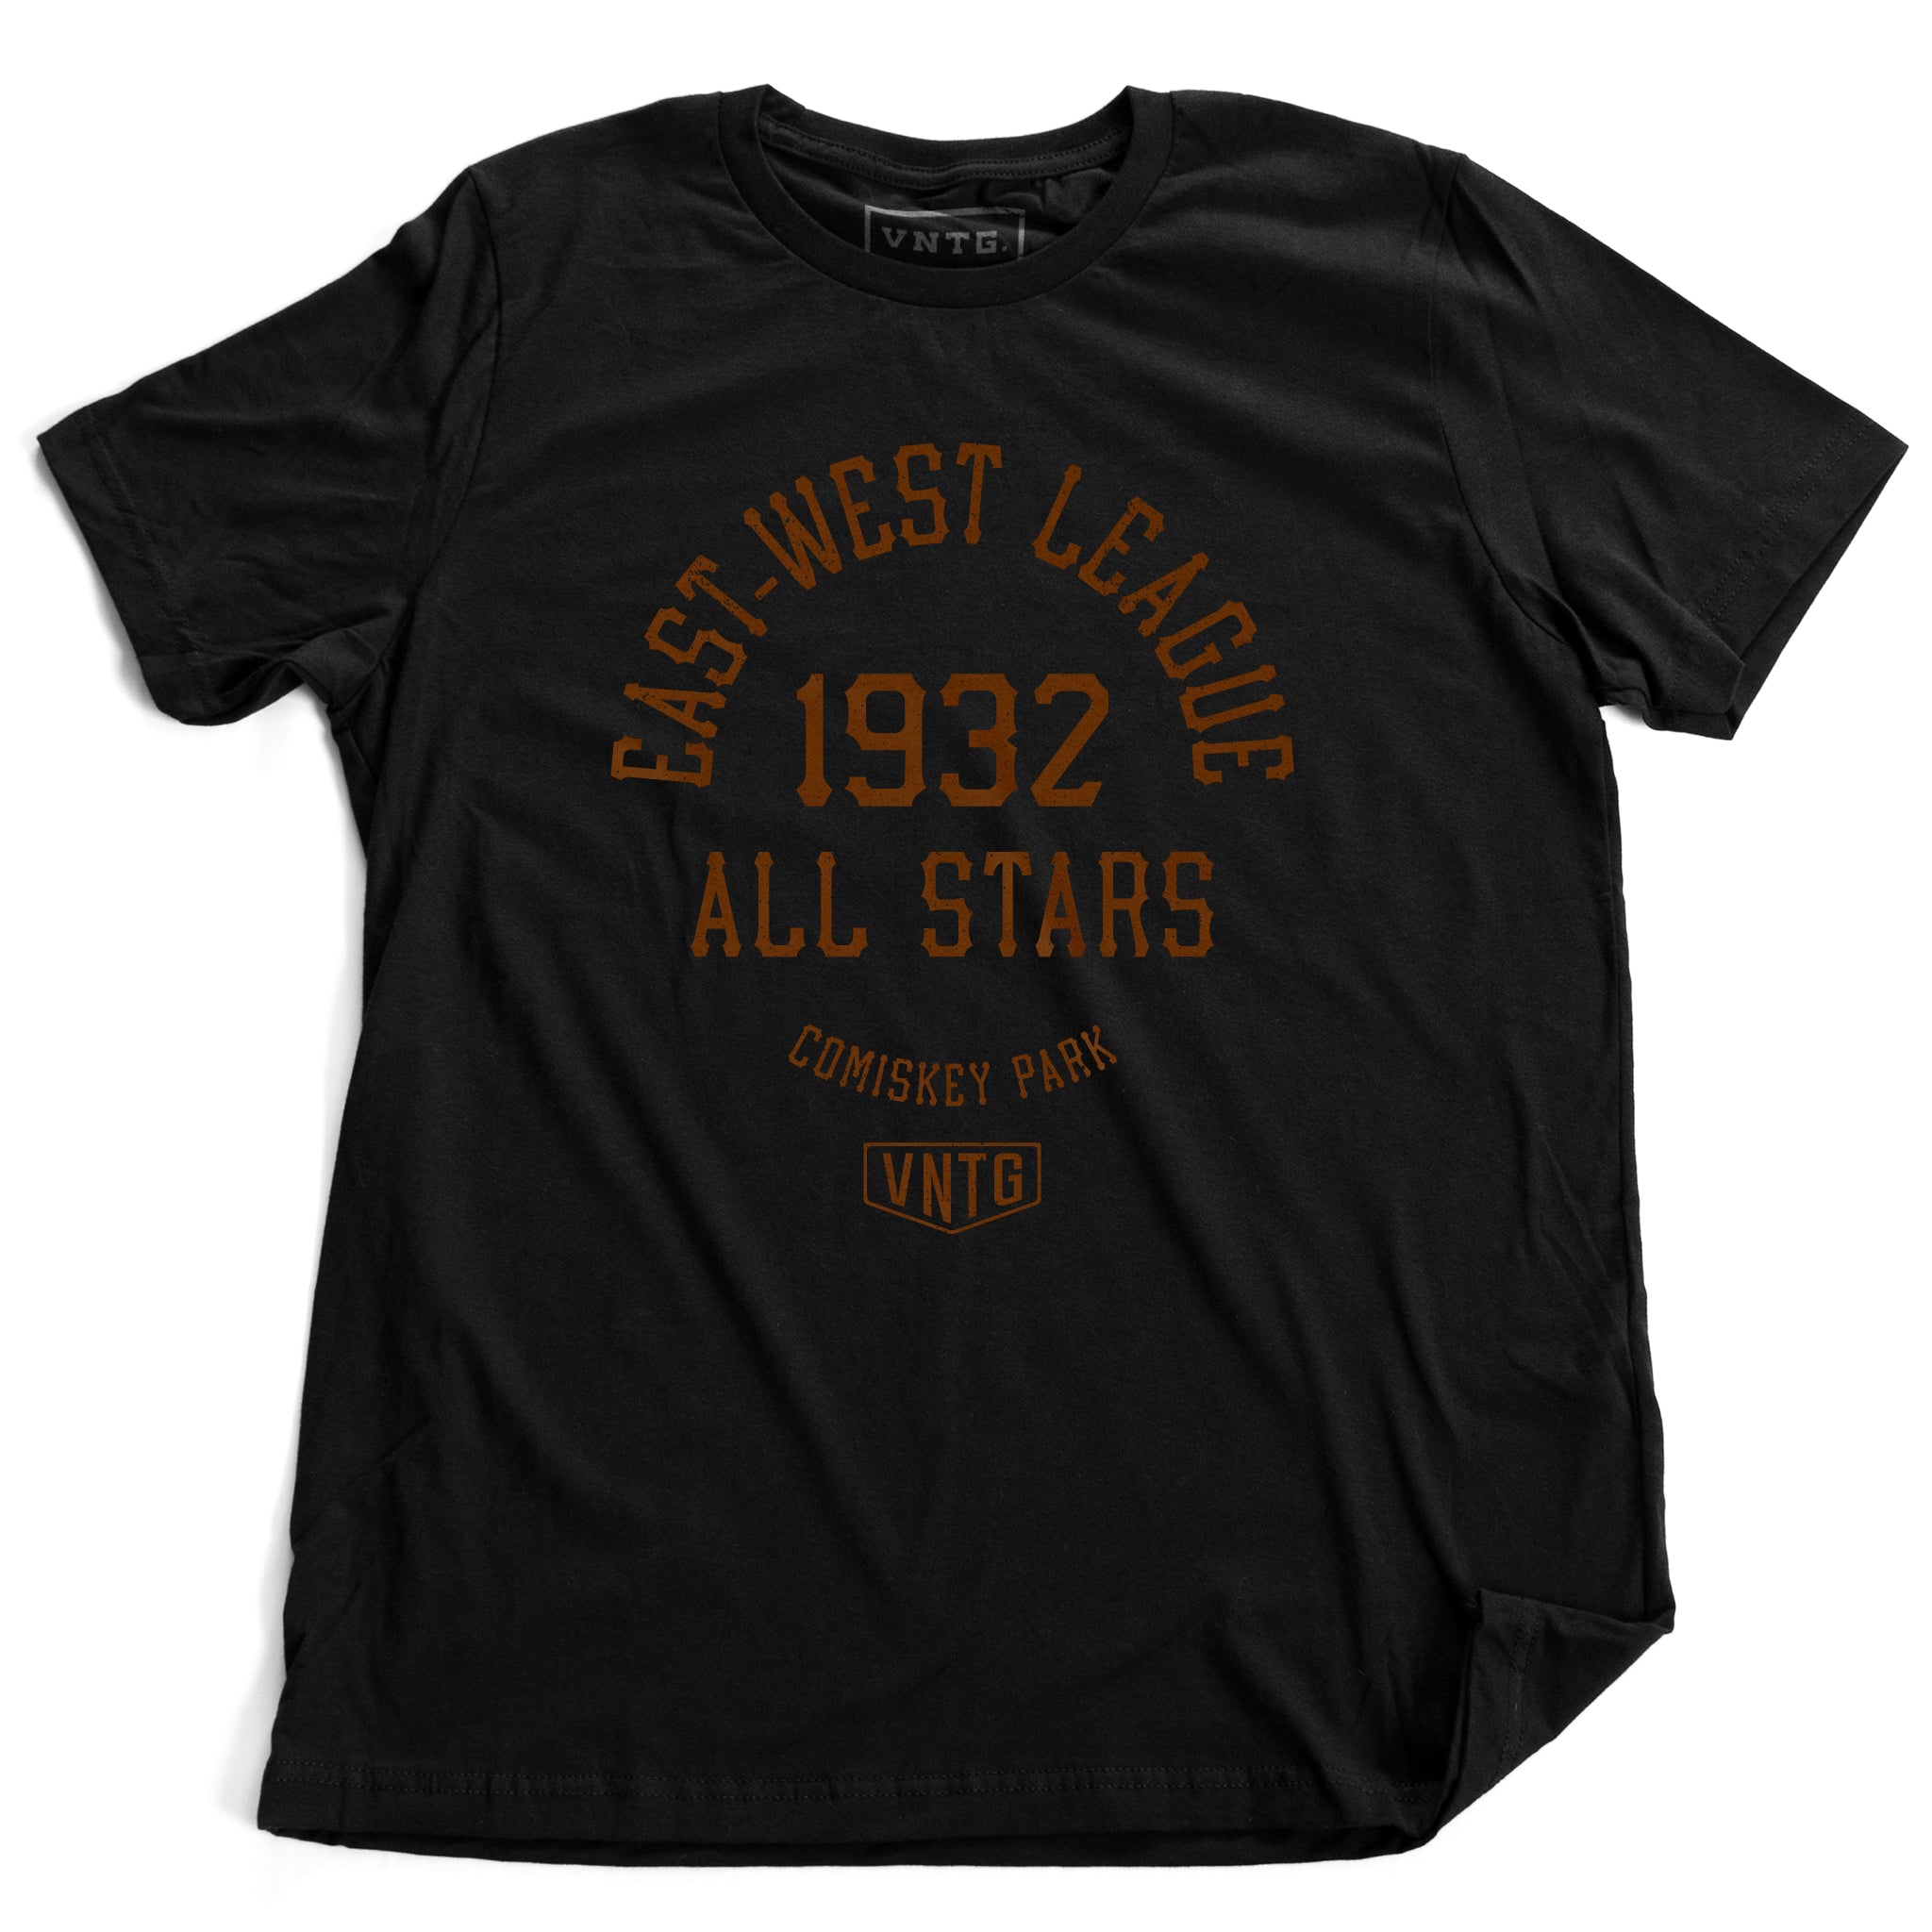 1932 East-West Baseball All-Stars / Comiskey Park – Wolfsaint